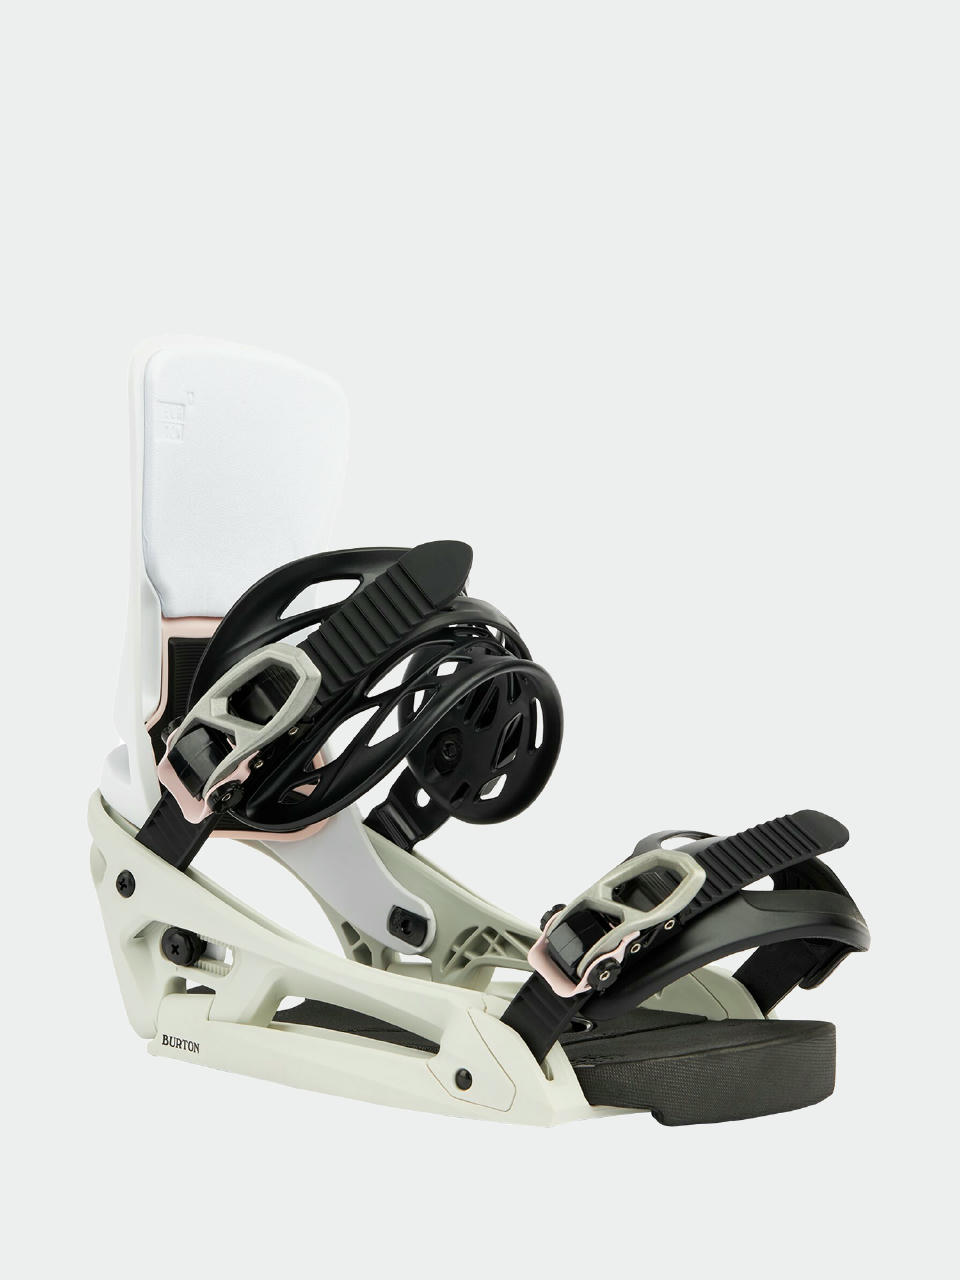 Burton X Snowboard bindings (white/gray/logo)